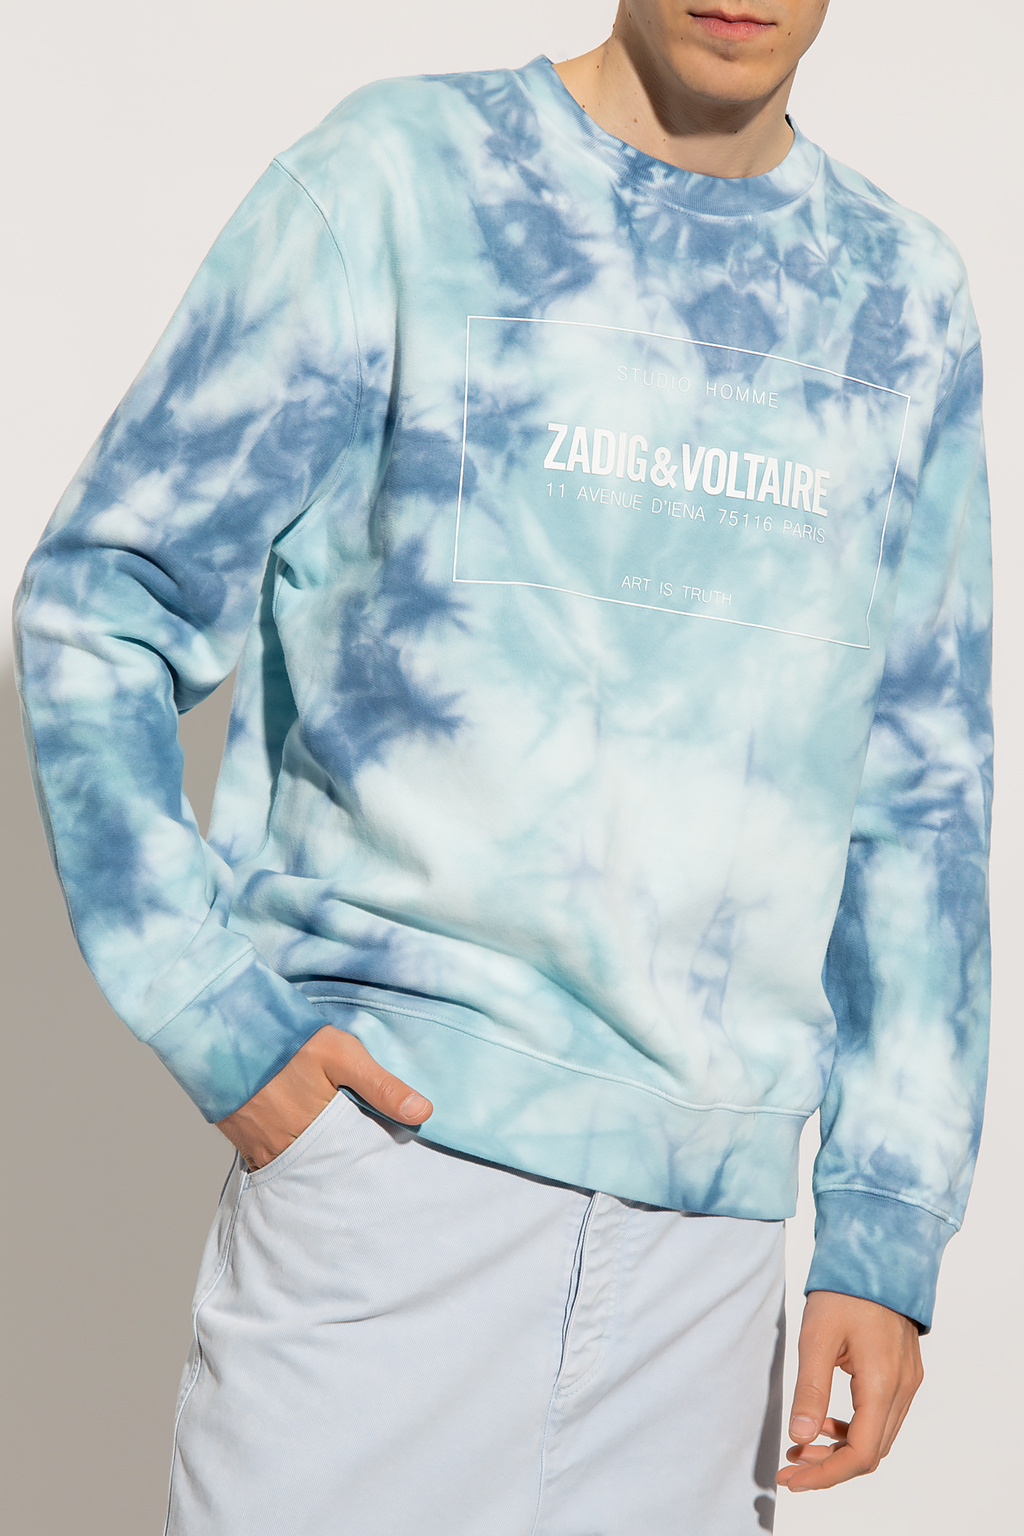 Zadig & Voltaire ‘Simba’ Loungeable sweatshirt